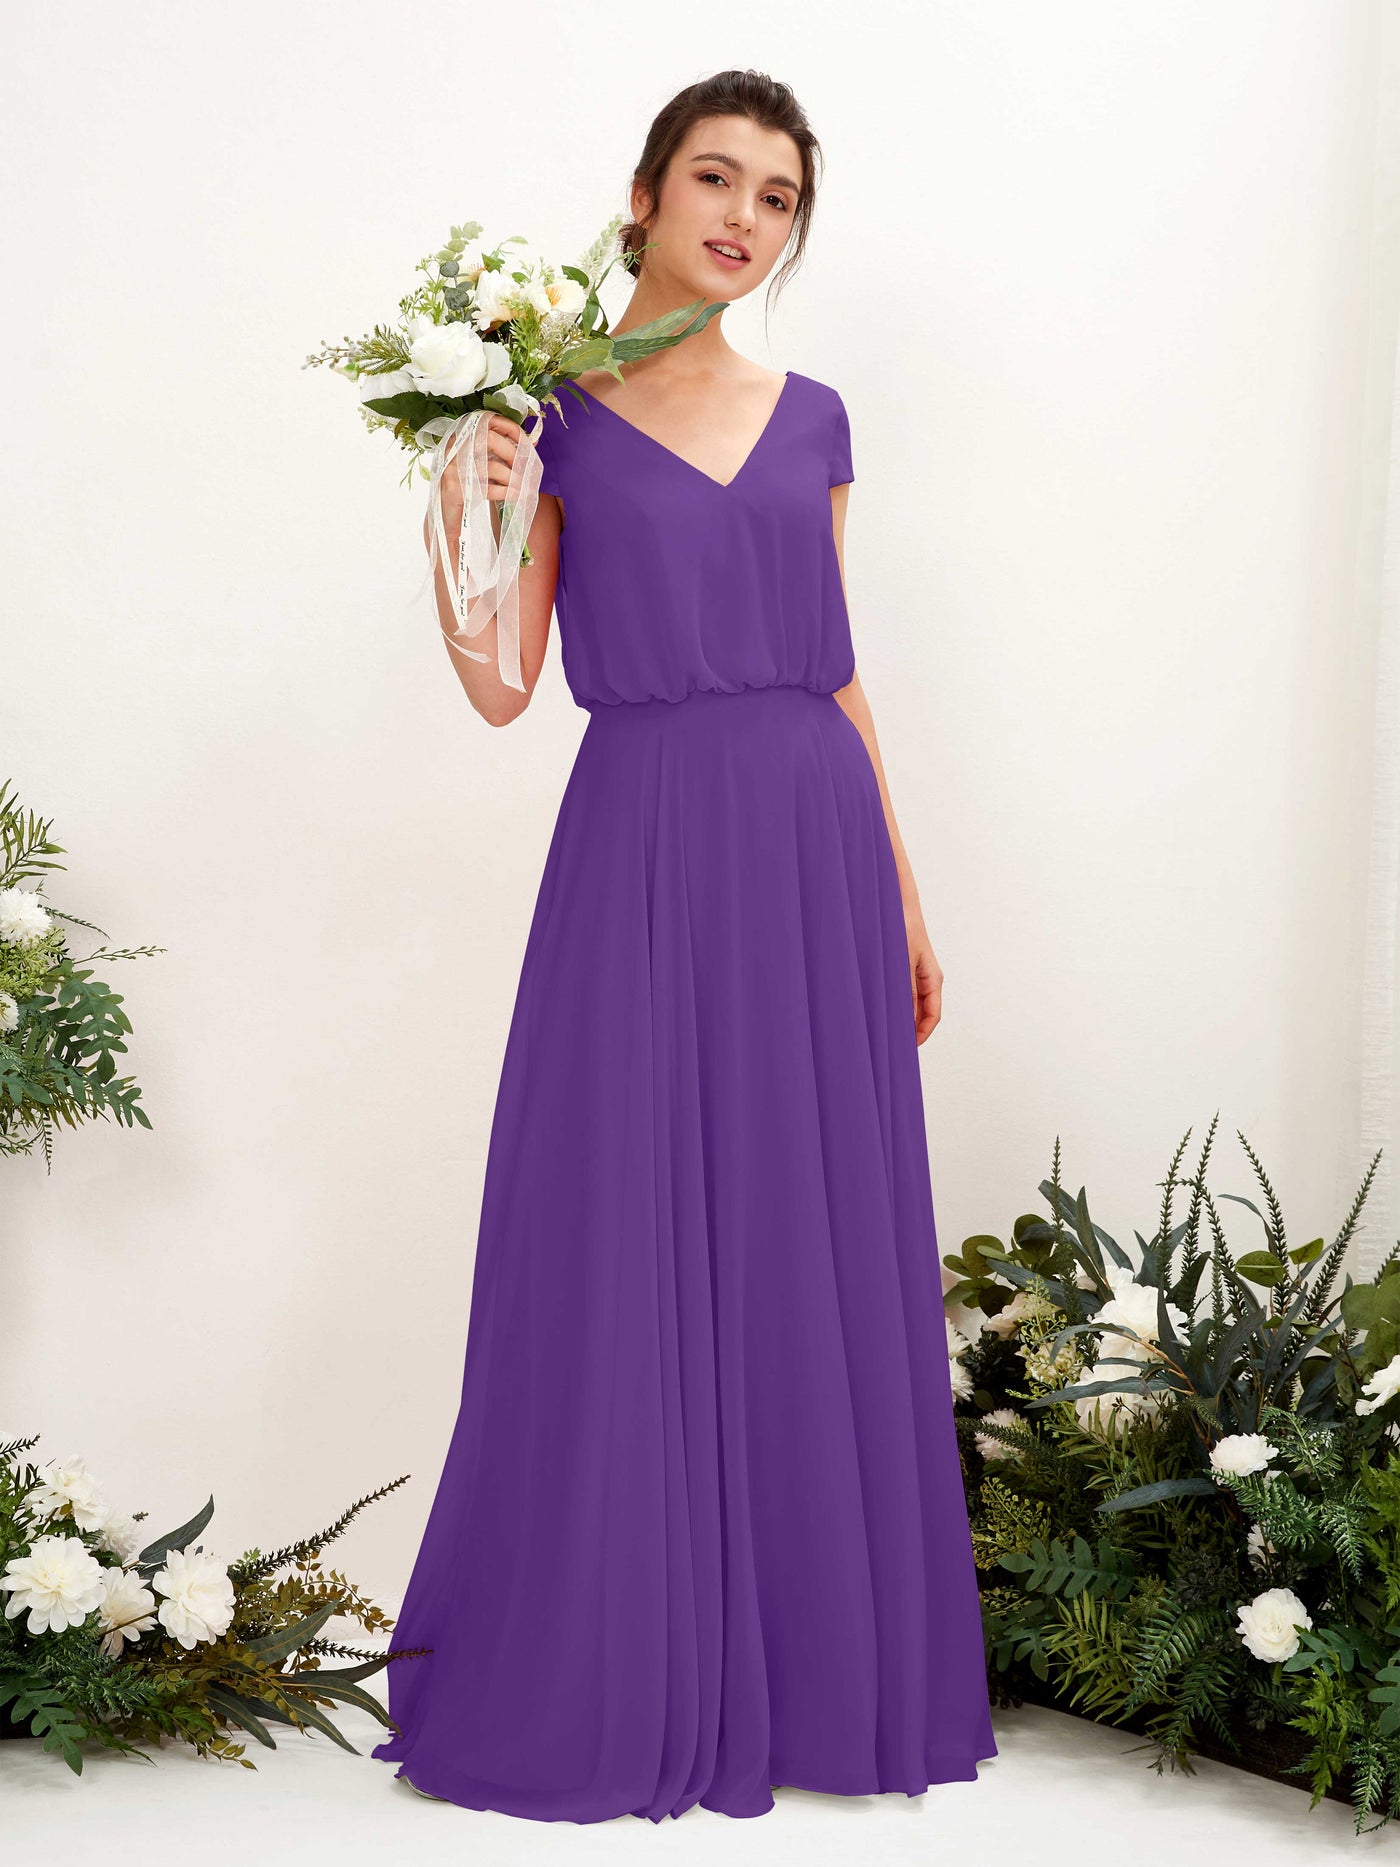 Regency Bridesmaid Dresses Bridesmaid Dress A-line Chiffon V-neck Full Length Short Sleeves Wedding Party Dress (81221828)#color_regency